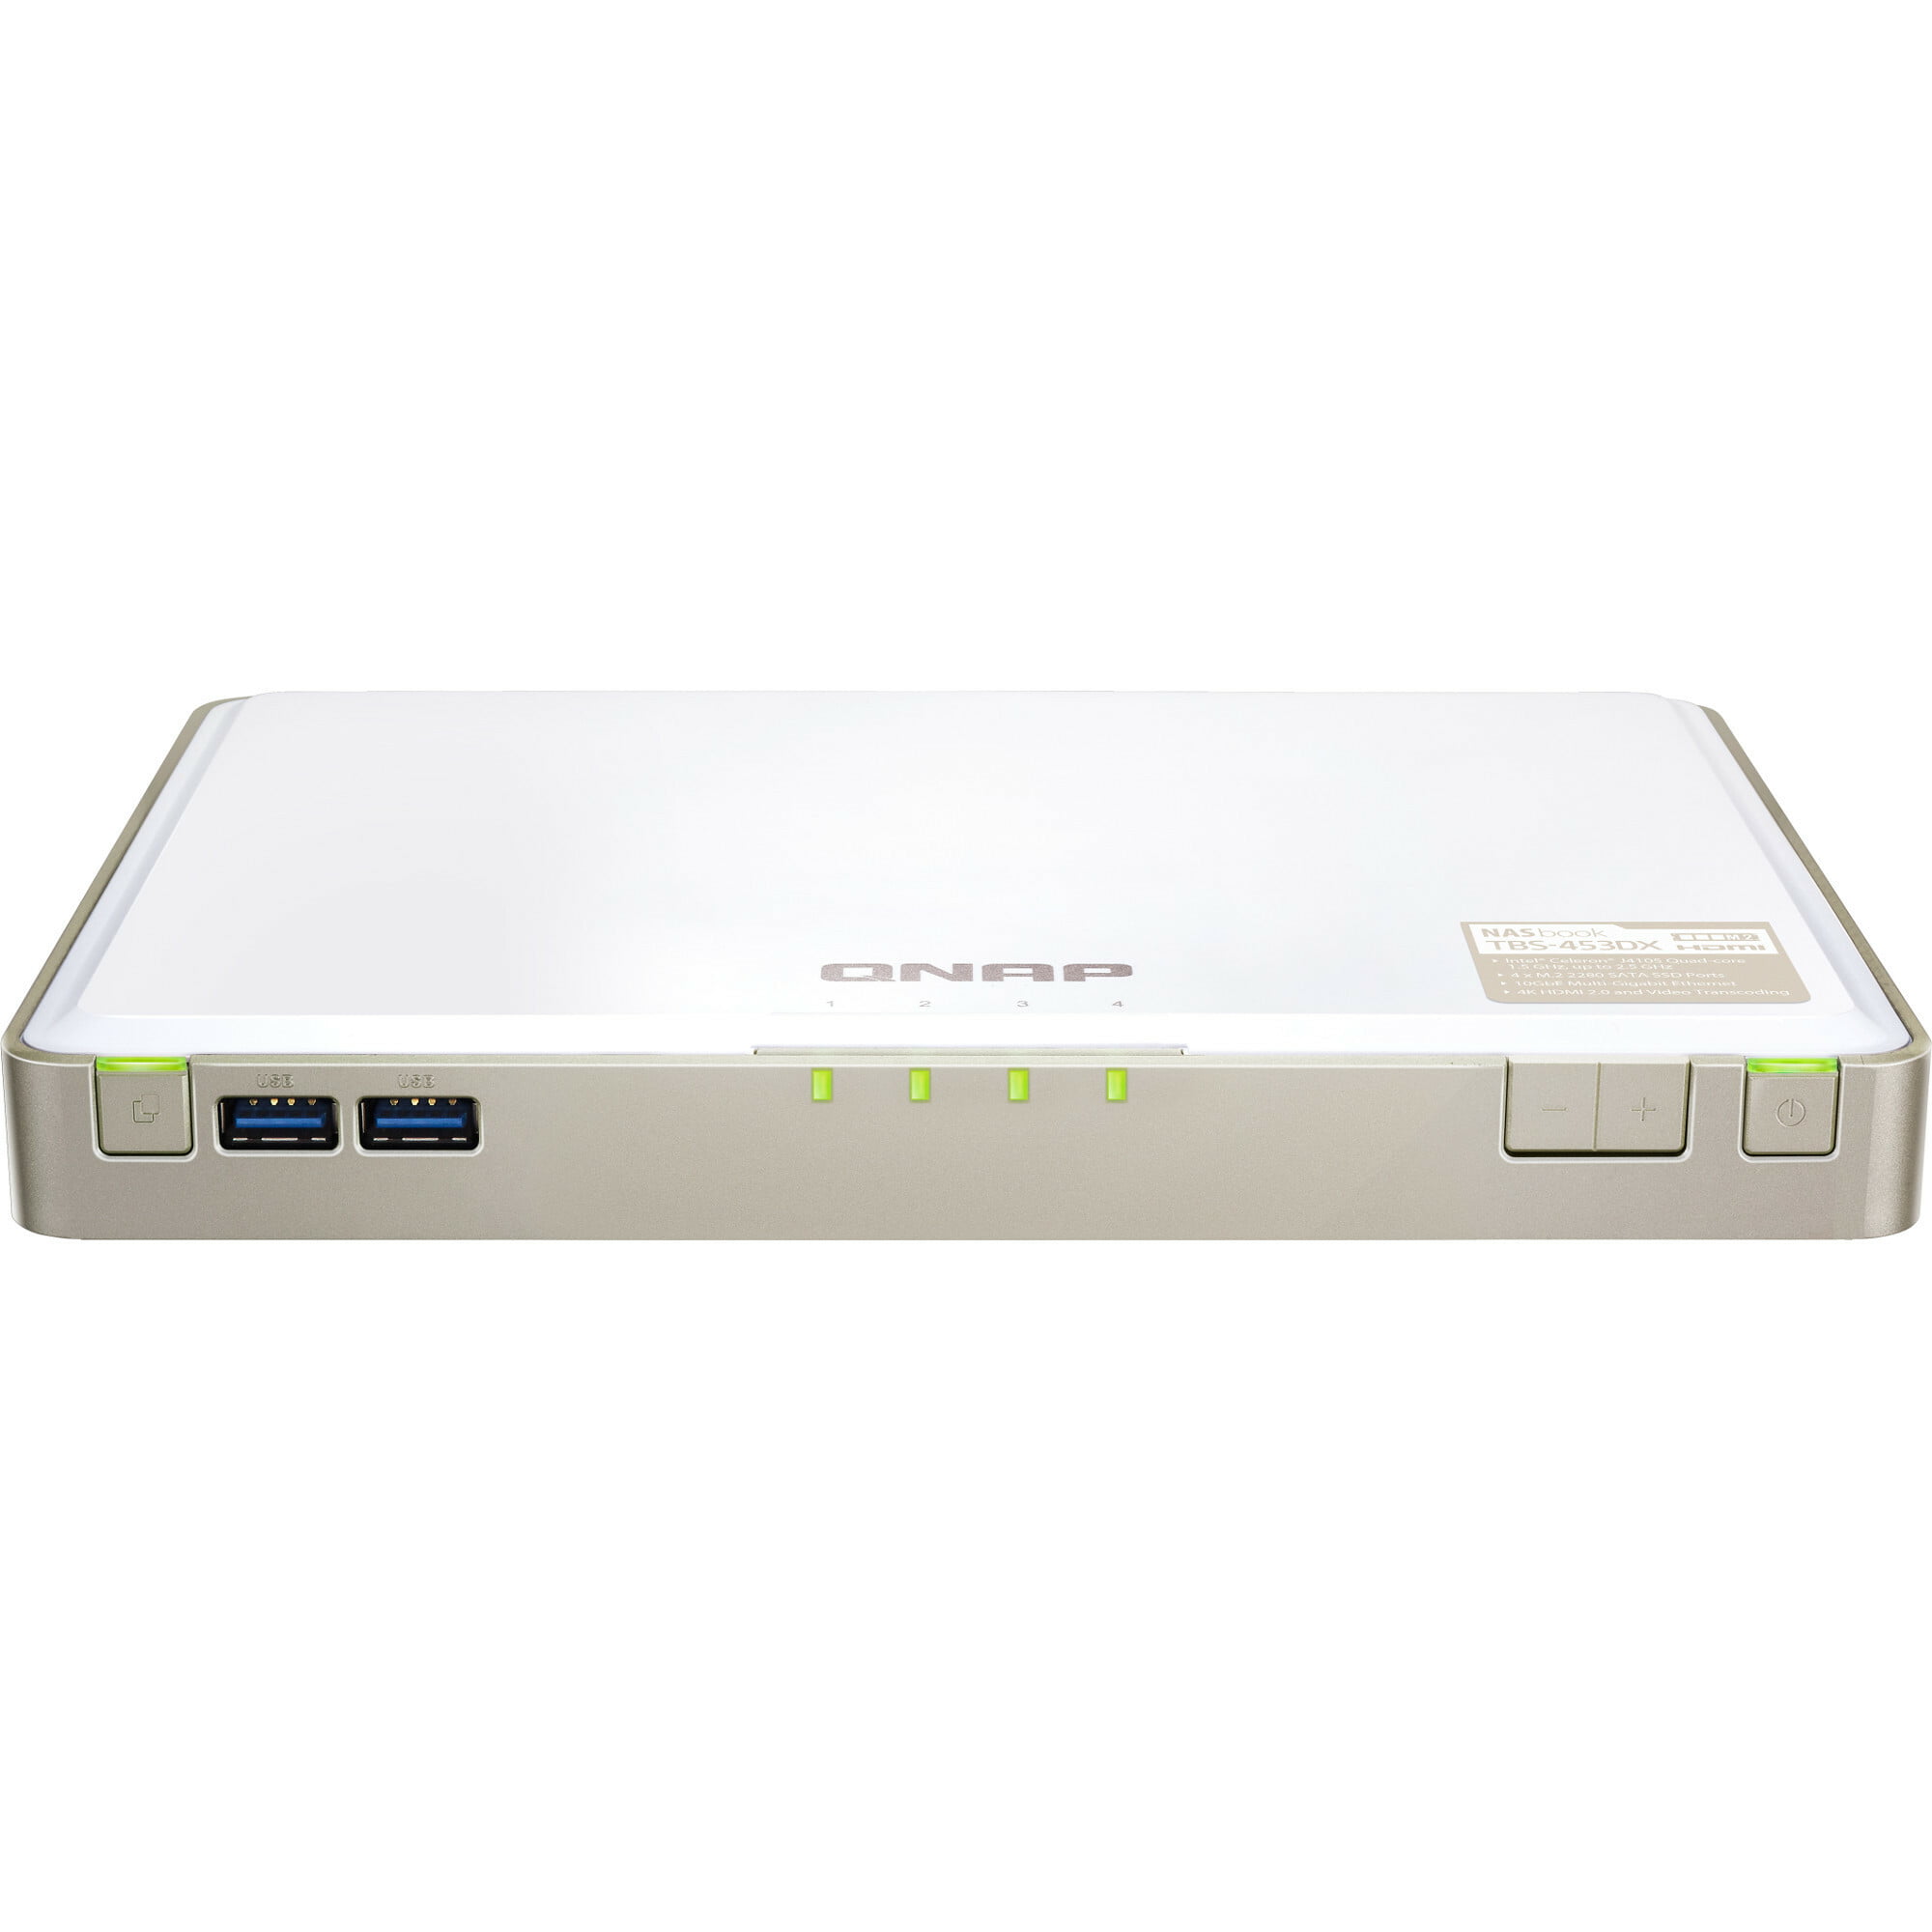 QNAP TBS-453DX M.2 NASbook - NAS server - 4 bays - SATA 6Gb/s - RAID 0, 1, 5, 6, 10, JBOD, 5 hot spare - RAM 4 GB - Gigabit Ethernet / 10 Gigabit Ethernet - iSCSI support - Walmart.com